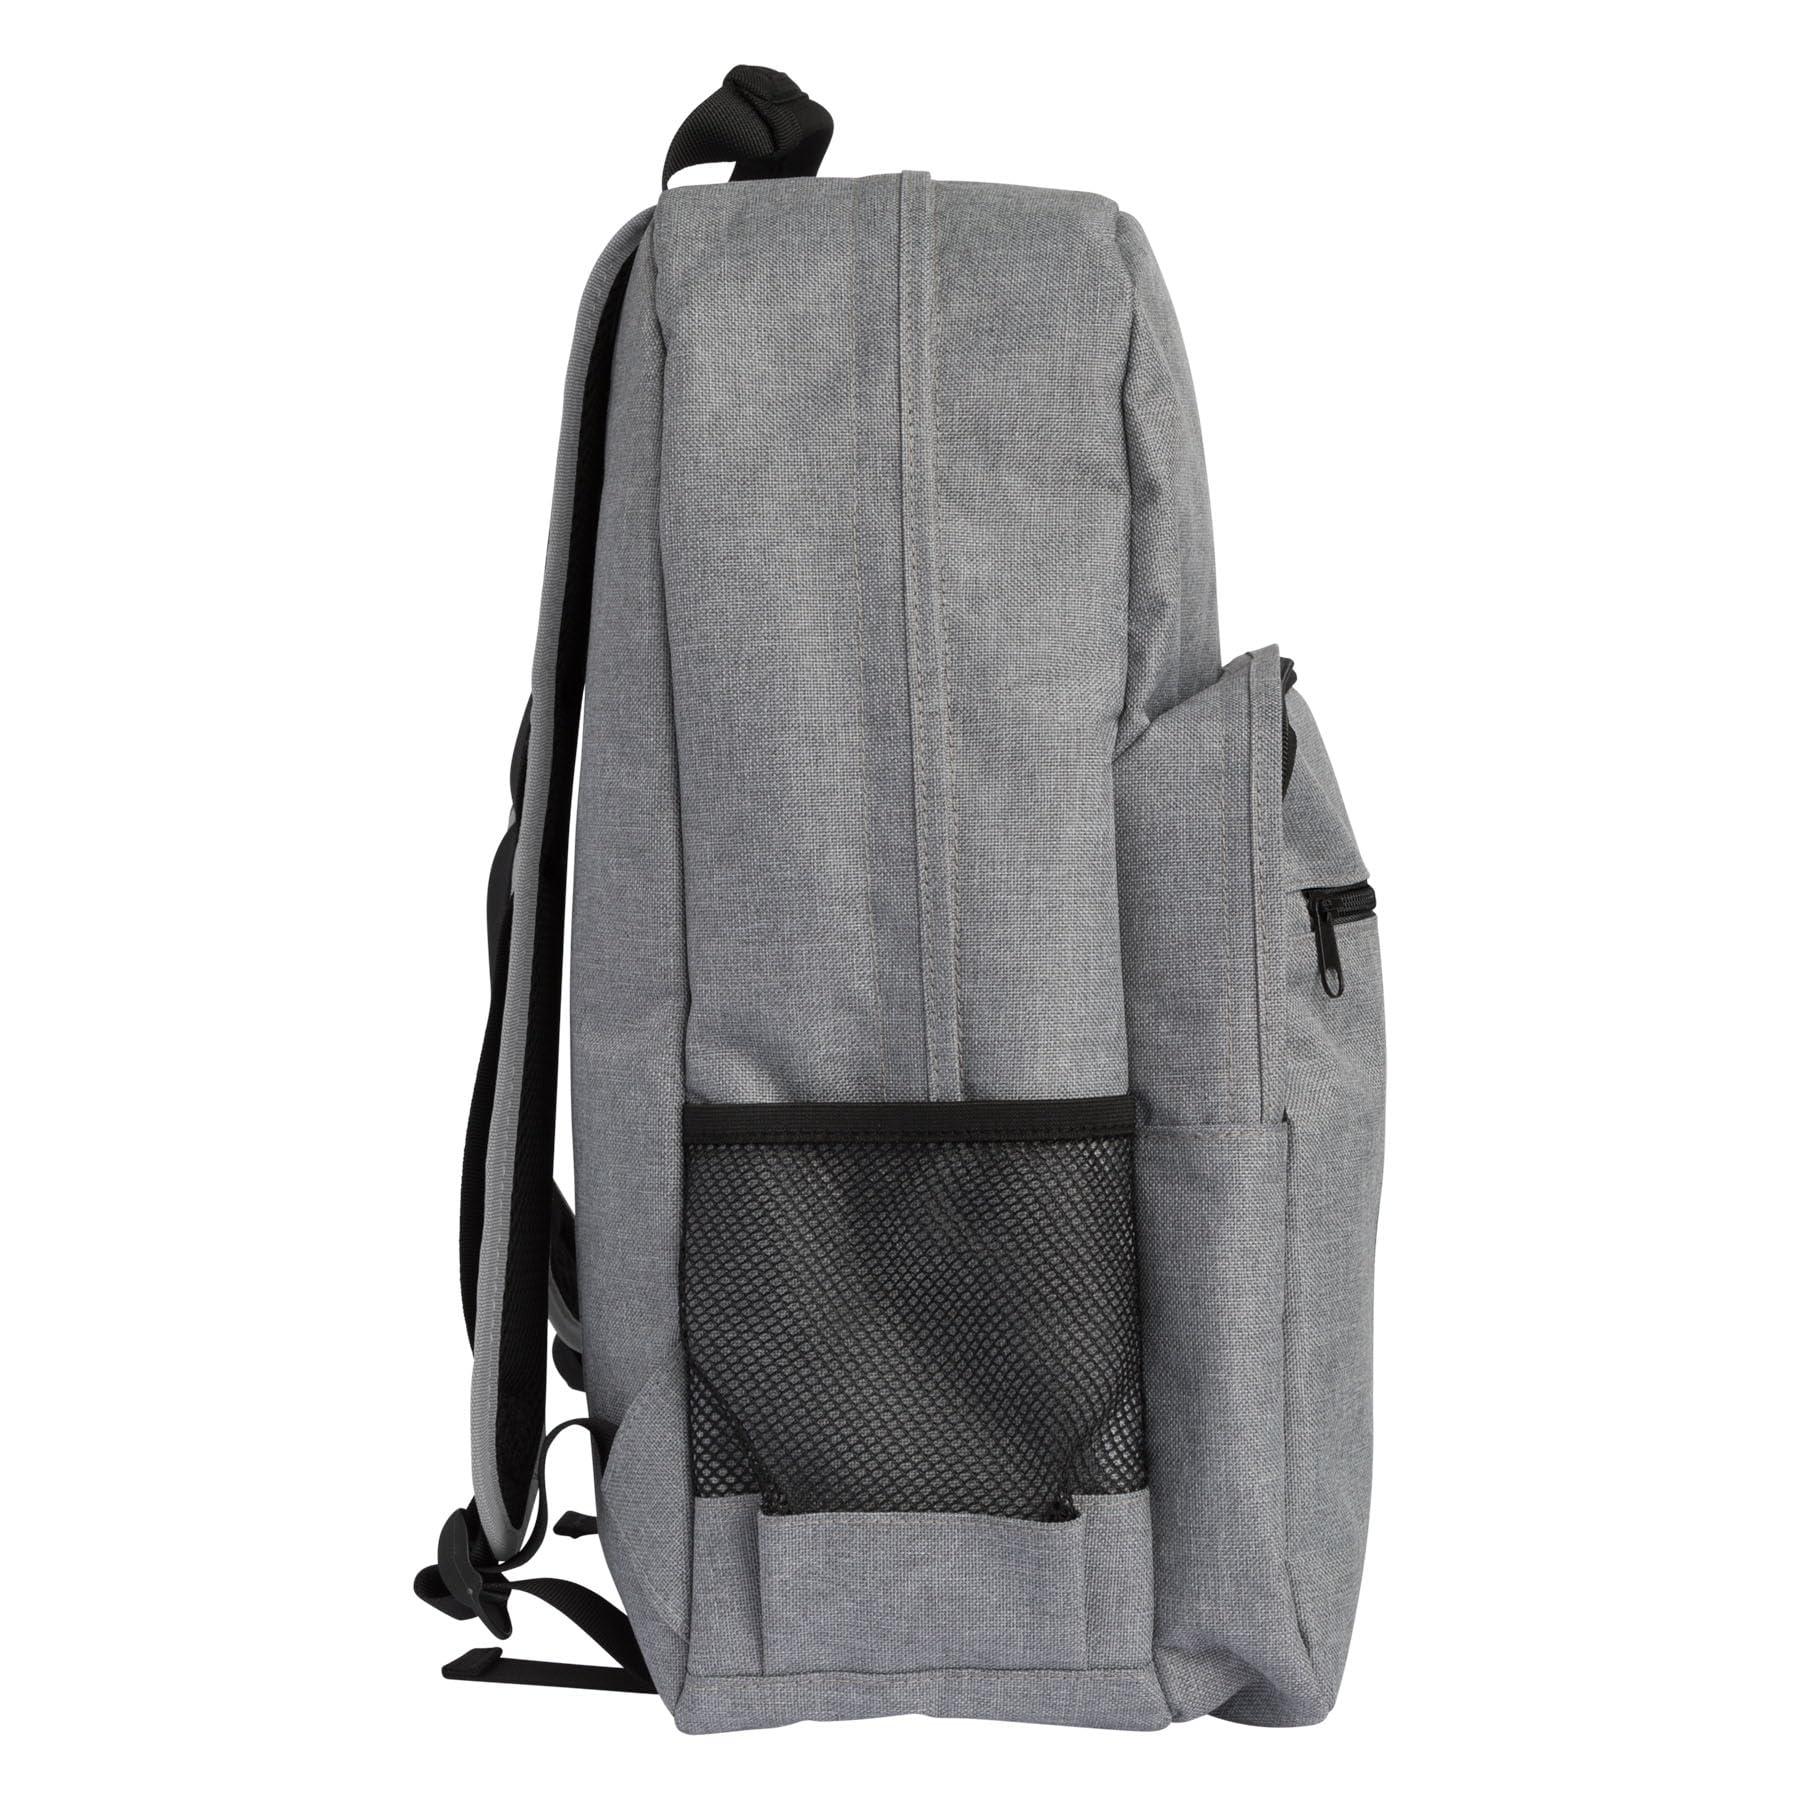 SANTA CRUZ Unisex Backpack Wave Dot Skate Backpack, Heather Grey, One Size